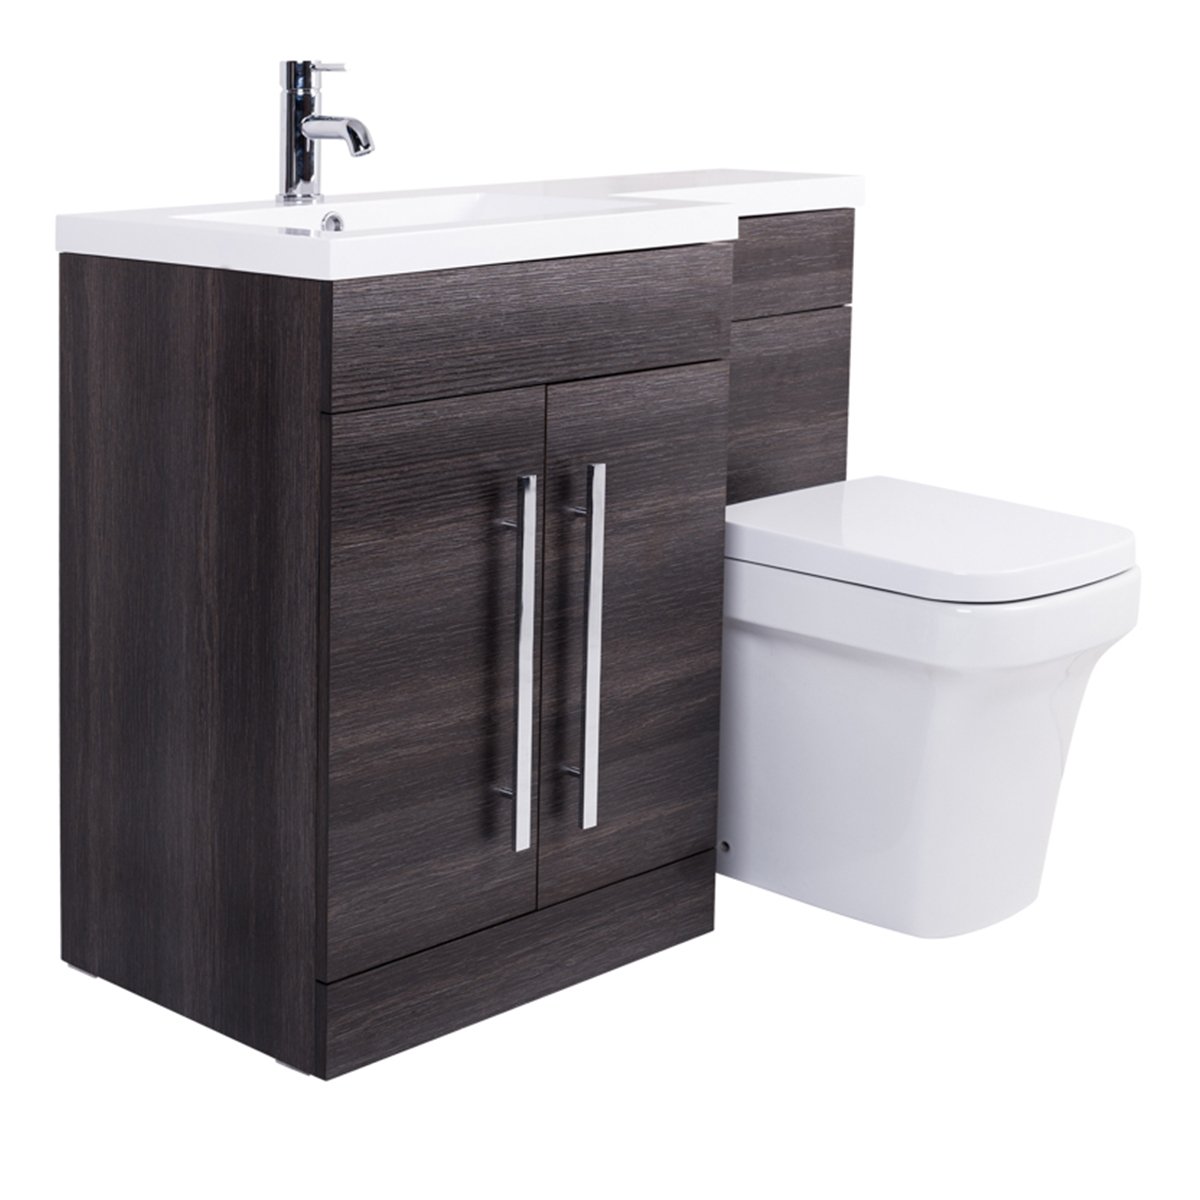 Bathroom LH & RH Combination Toilet, Vanity Unit & Basin ...